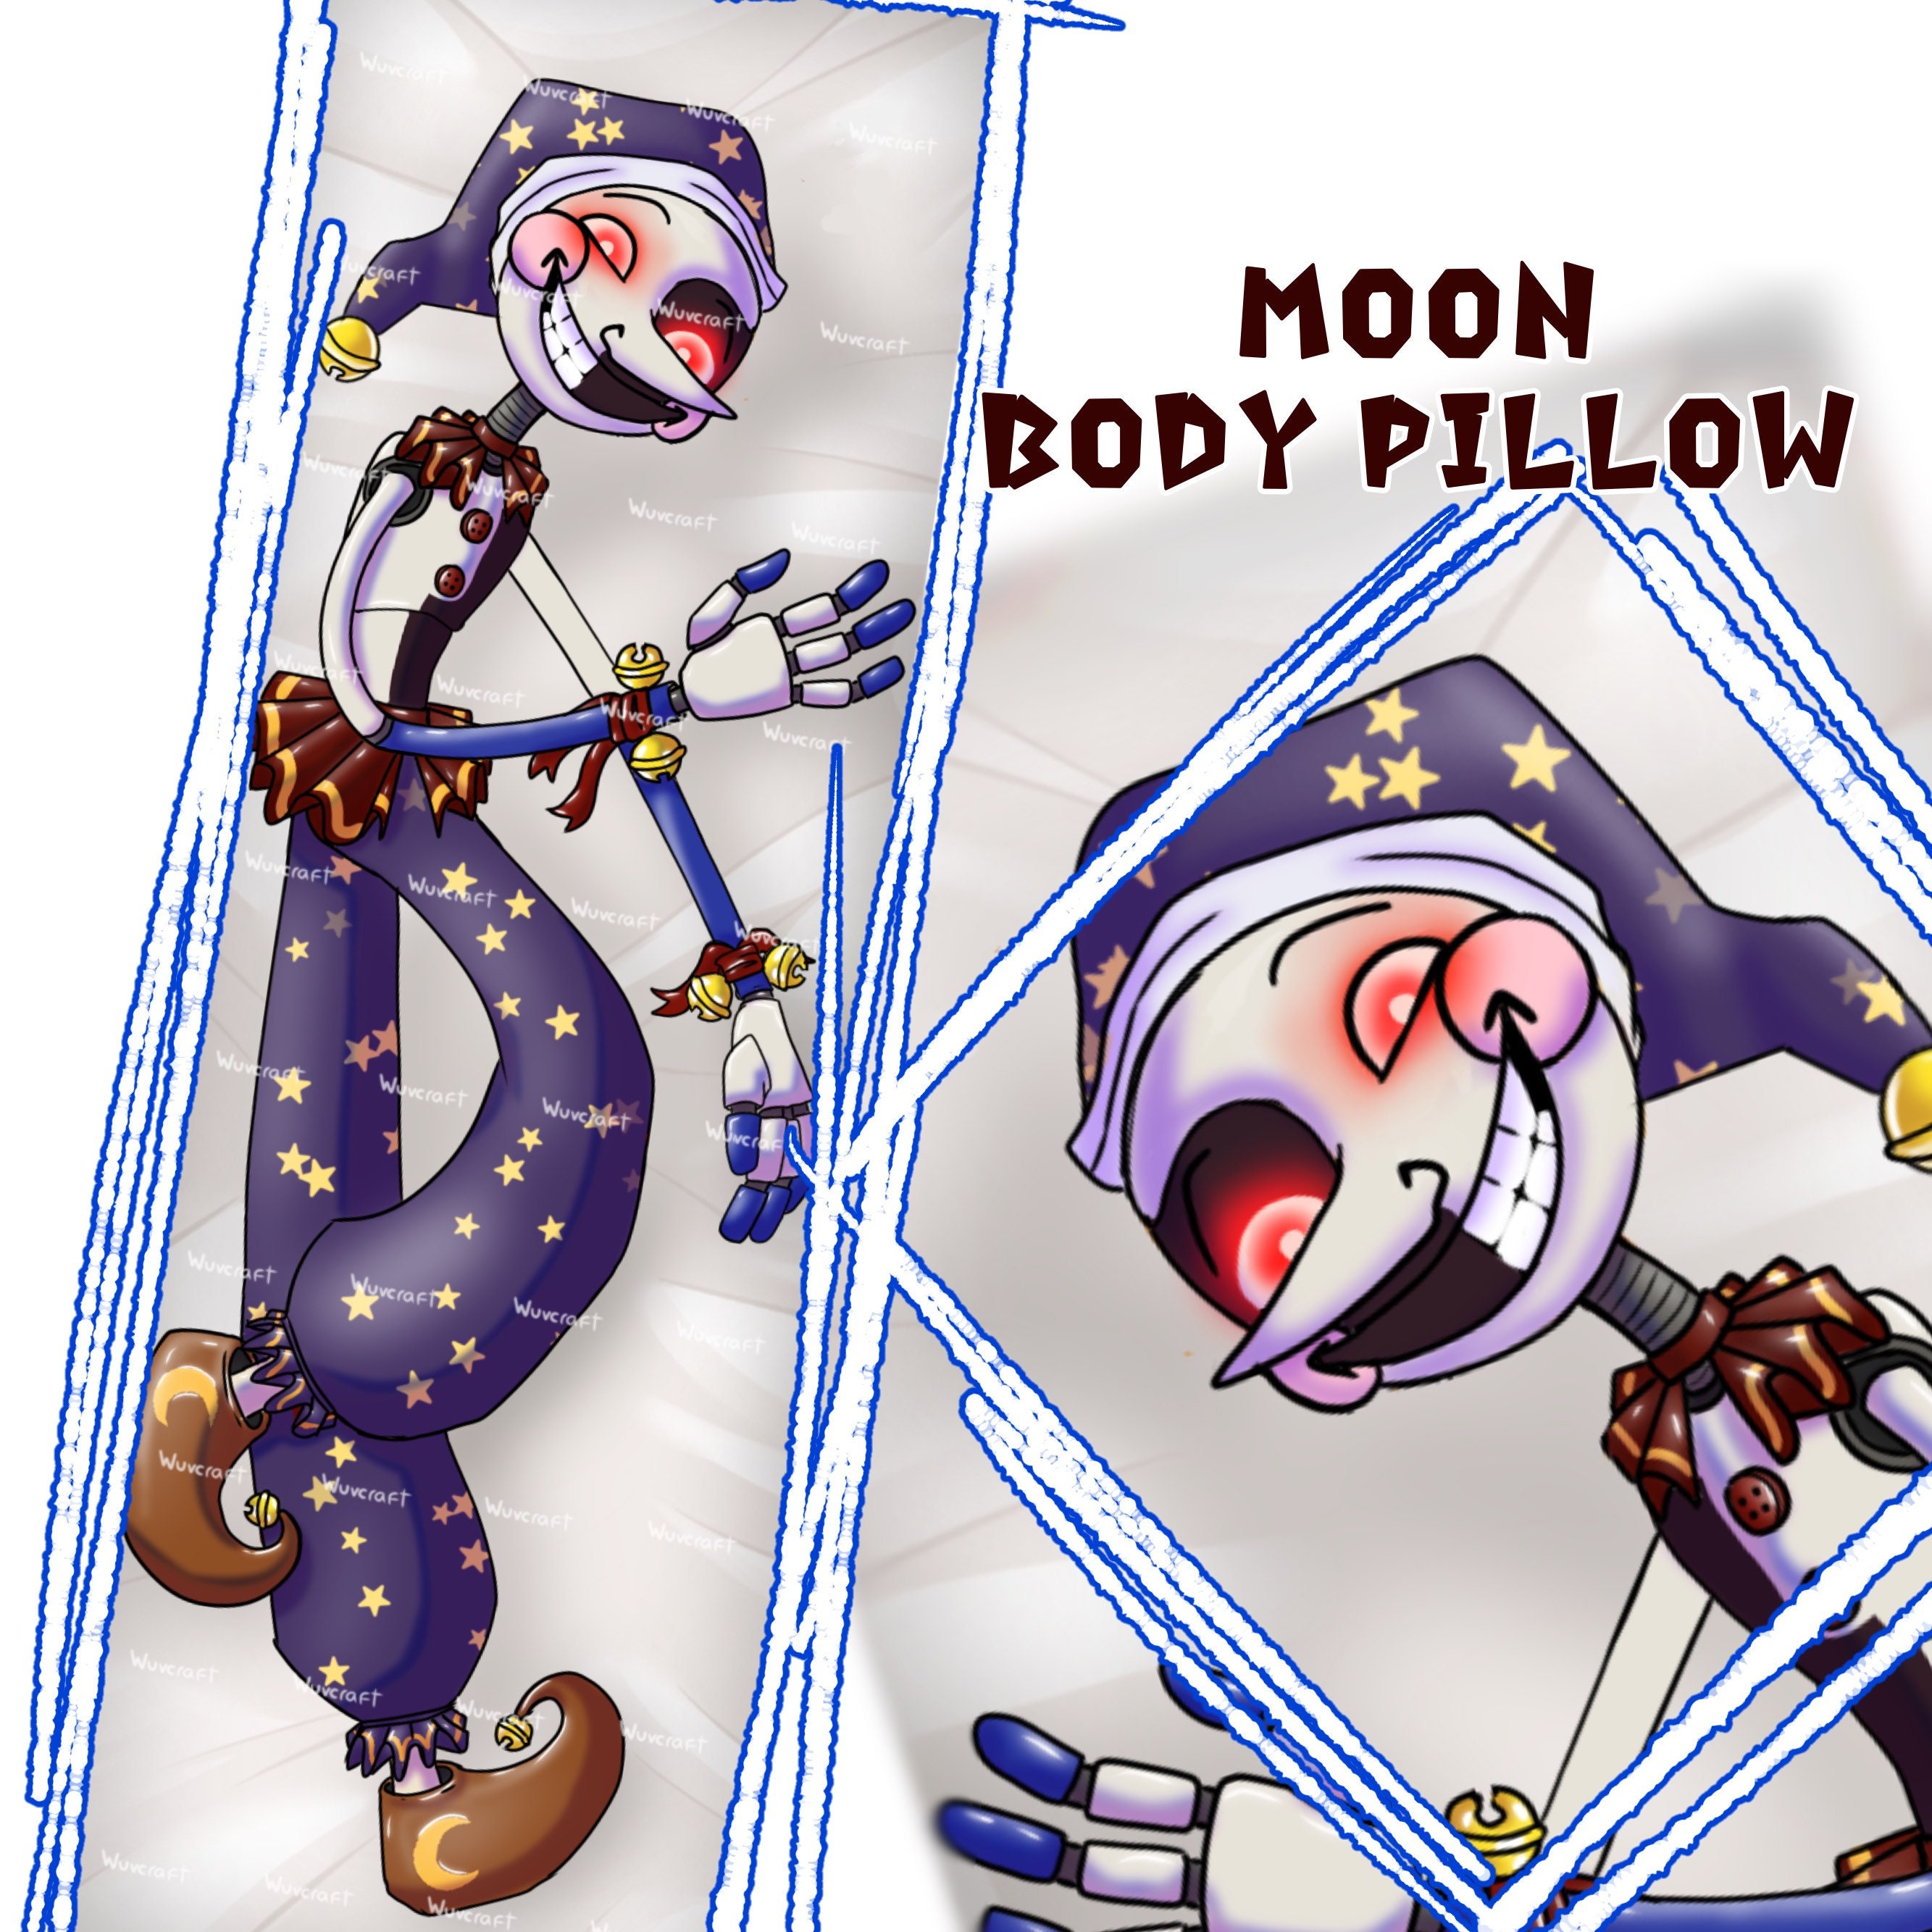 Dakimakura roxanne wolf (fnaf) Anime Robot Pillowcase Life Size Double  Sided Print Body Pillow Cover